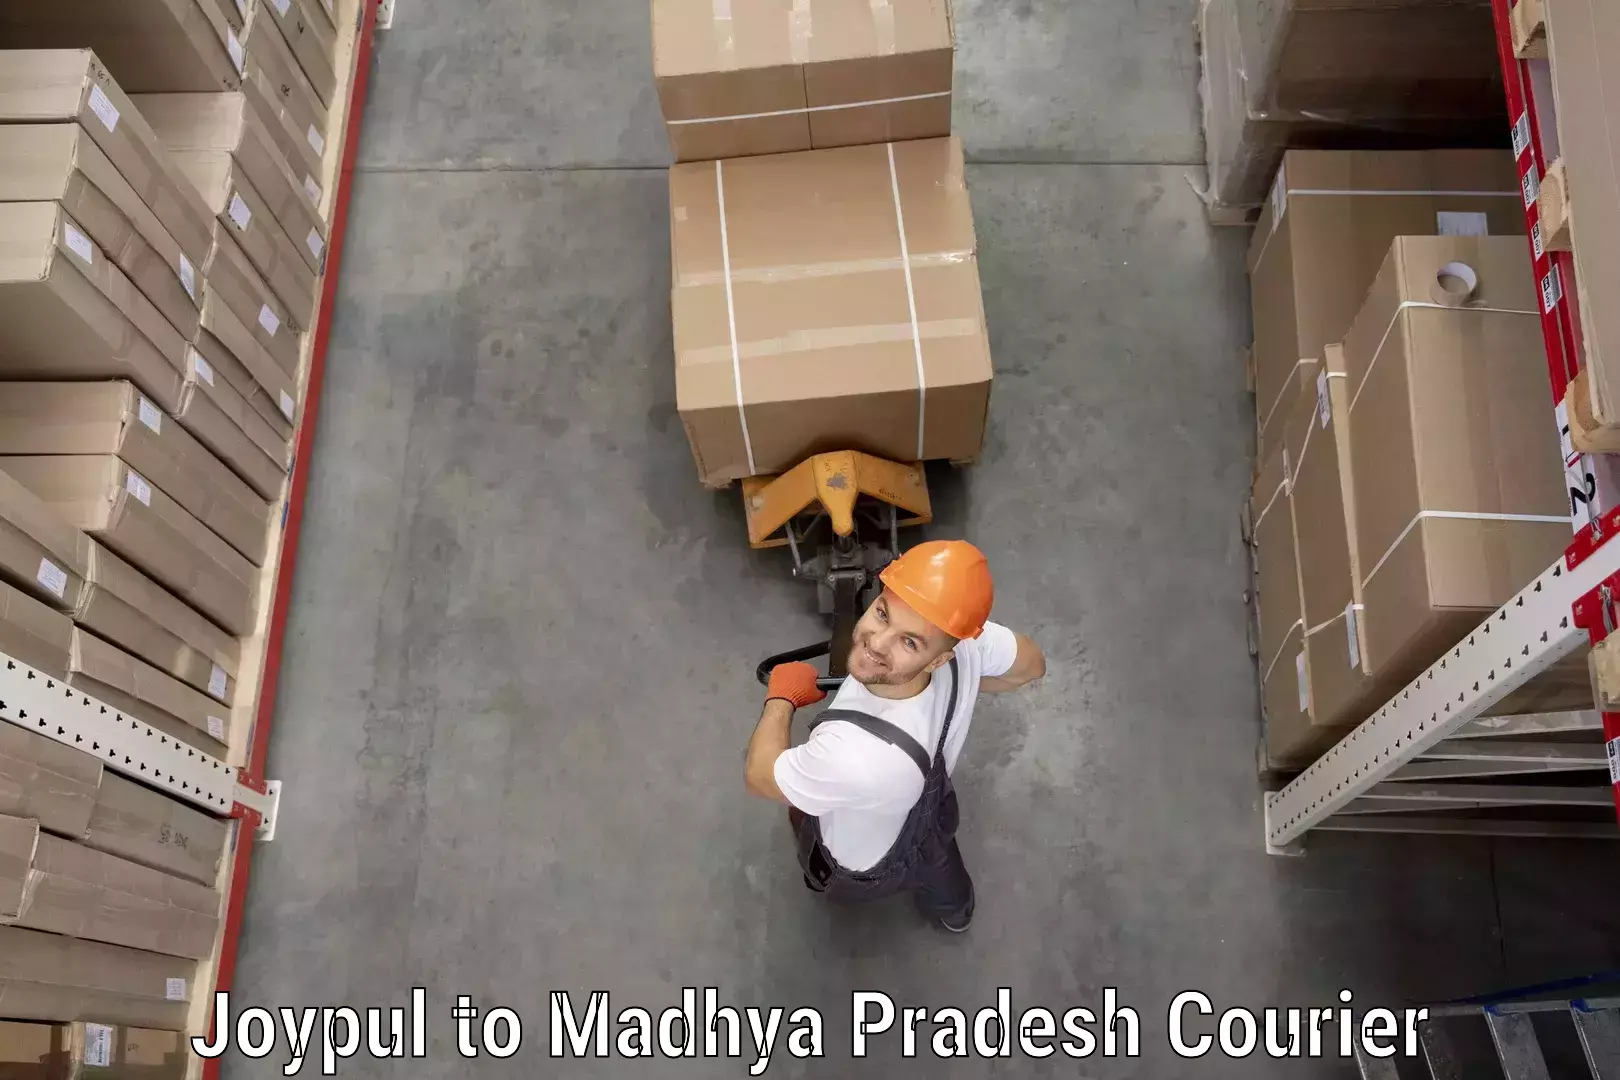 Cash on delivery service Joypul to Madhya Pradesh